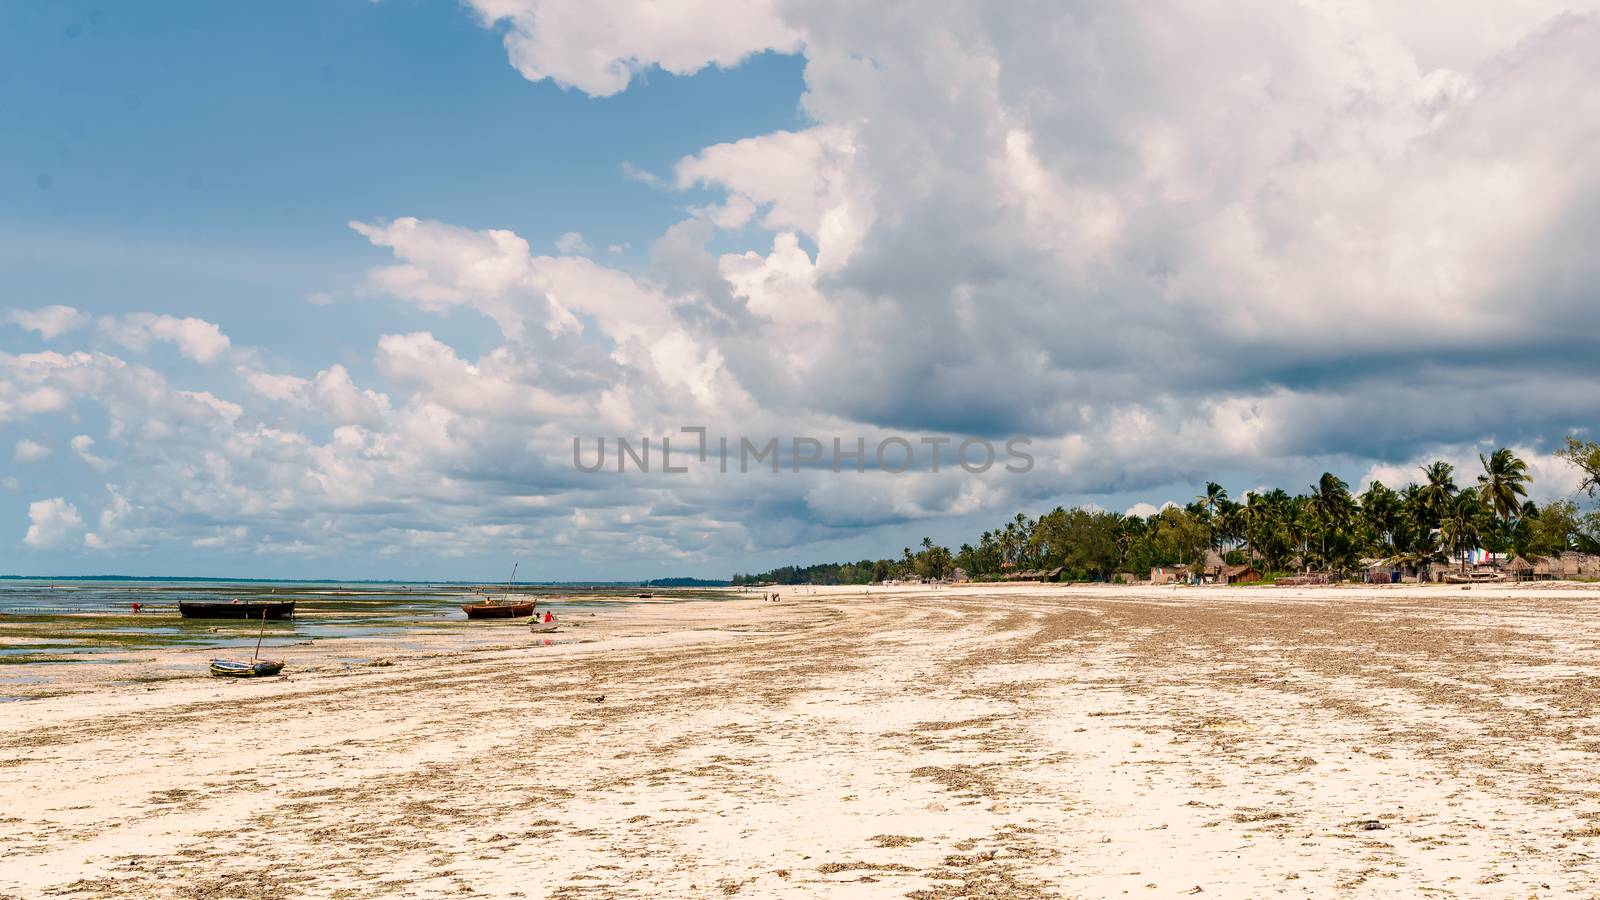 Low tide in Zanzibar beach by Robertobinetti70